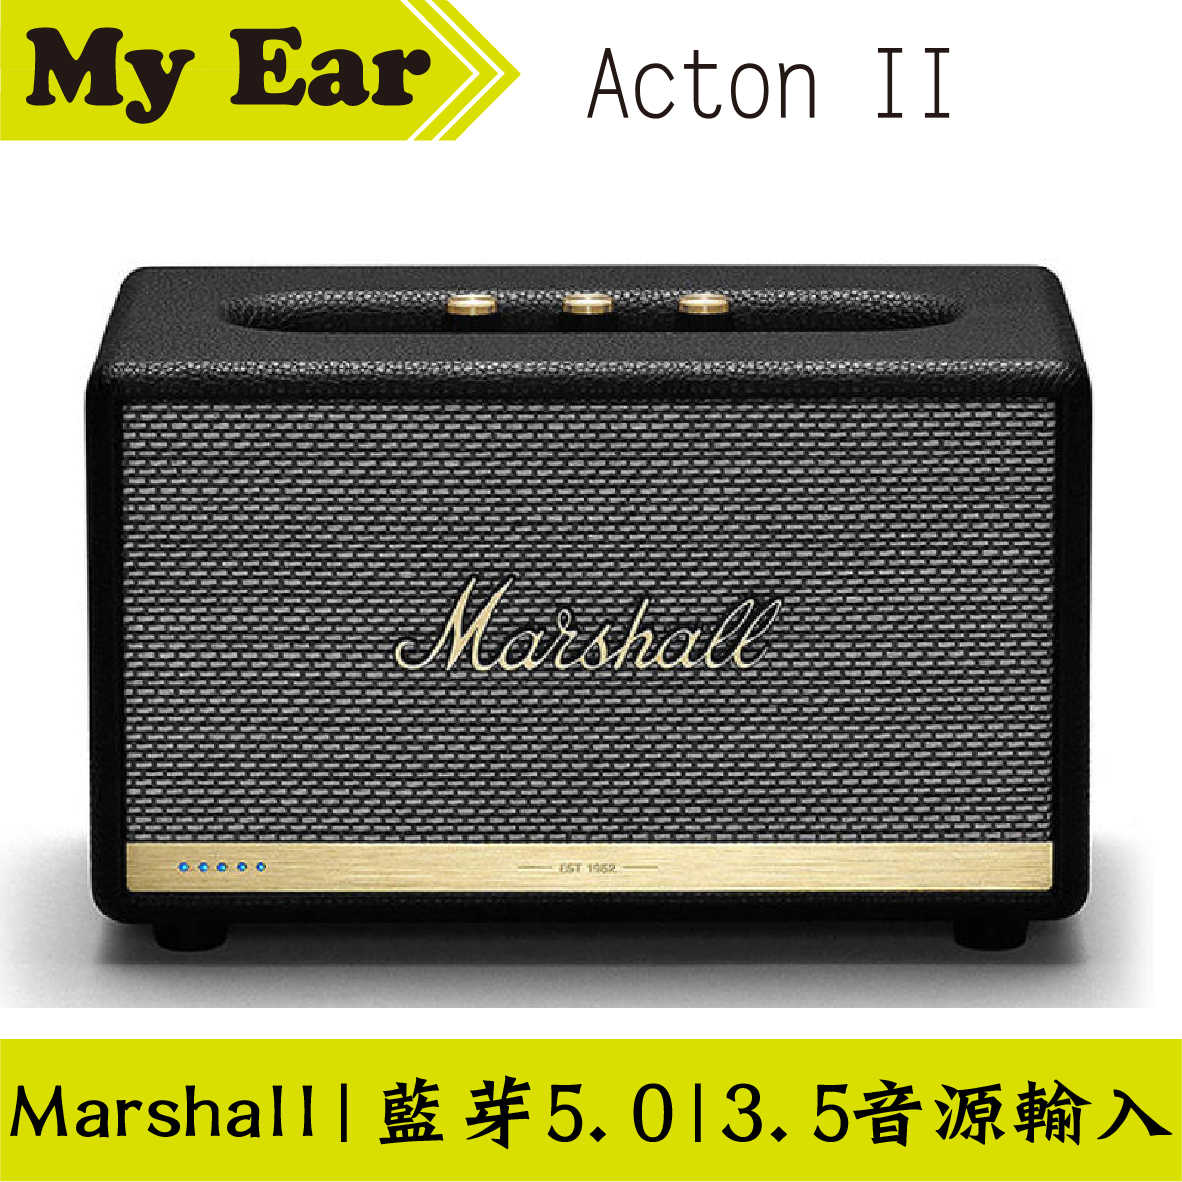 Marshall Acton II 無線藍芽 喇叭音響 藍芽5.0 黑色 | My Ear耳機專門店